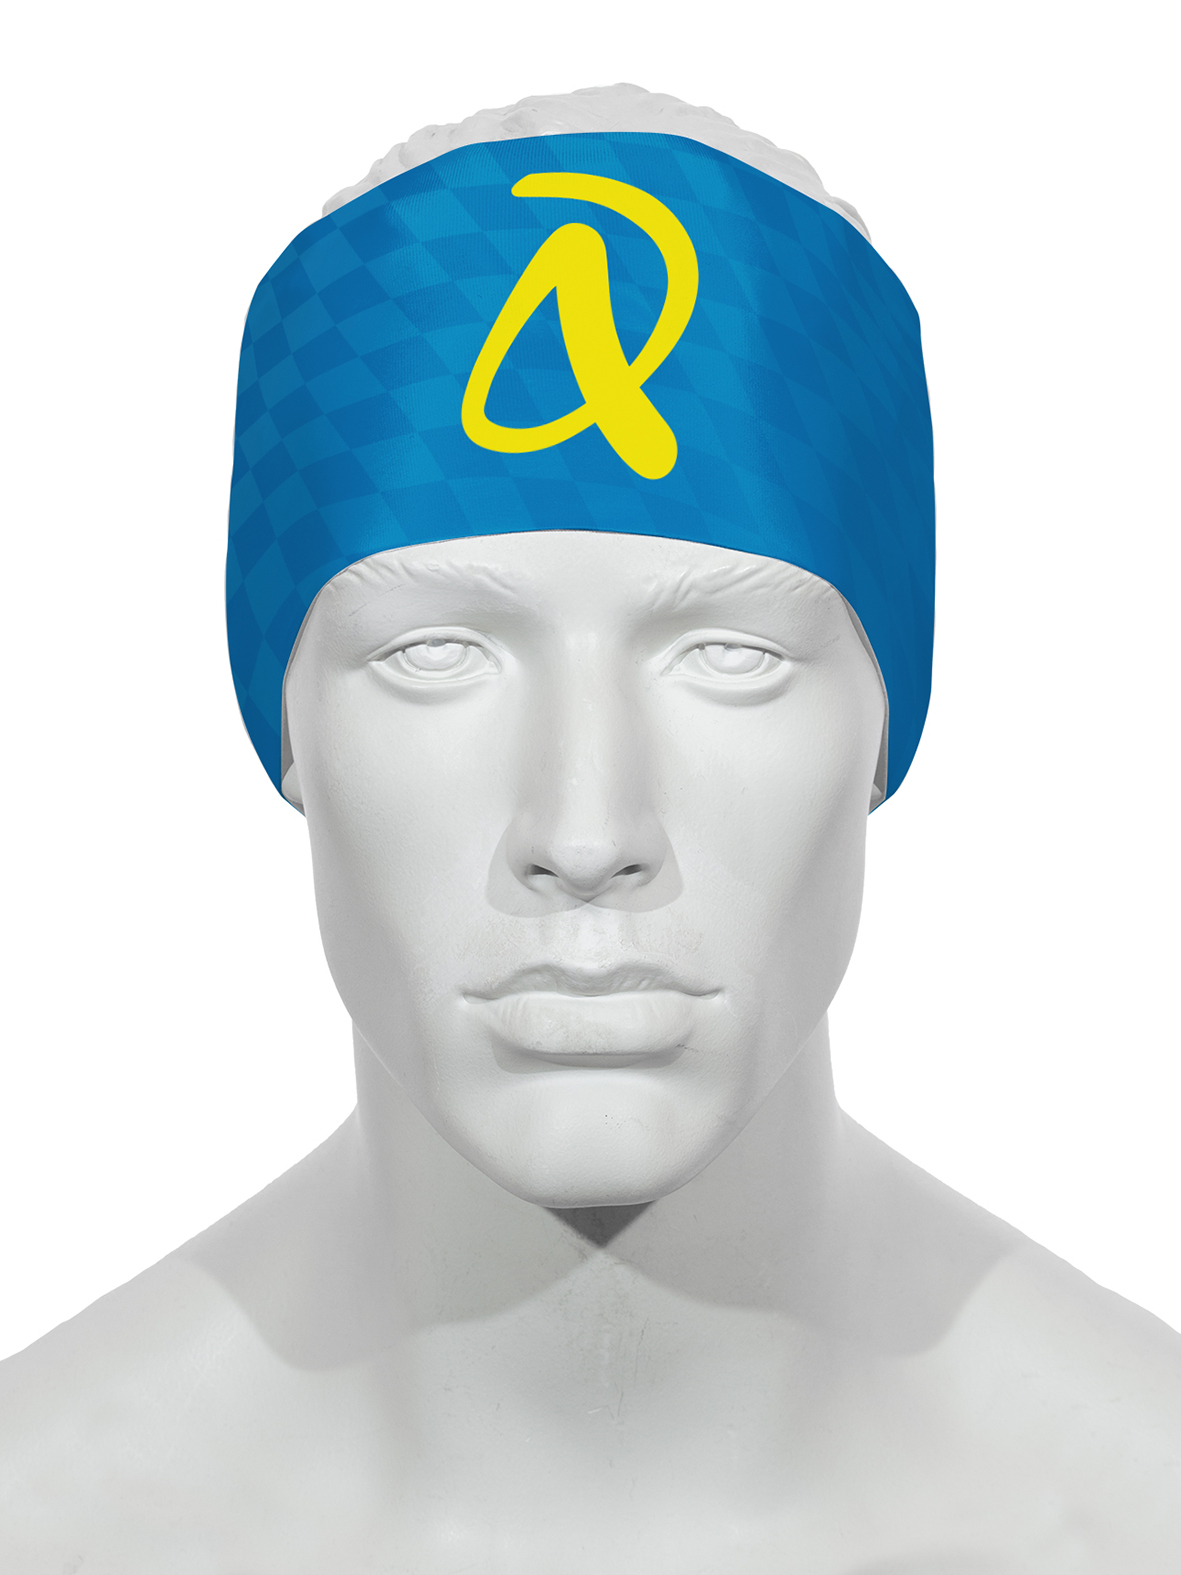 Stirnband RRT991U / blau - neongelb / Andi Dreitz